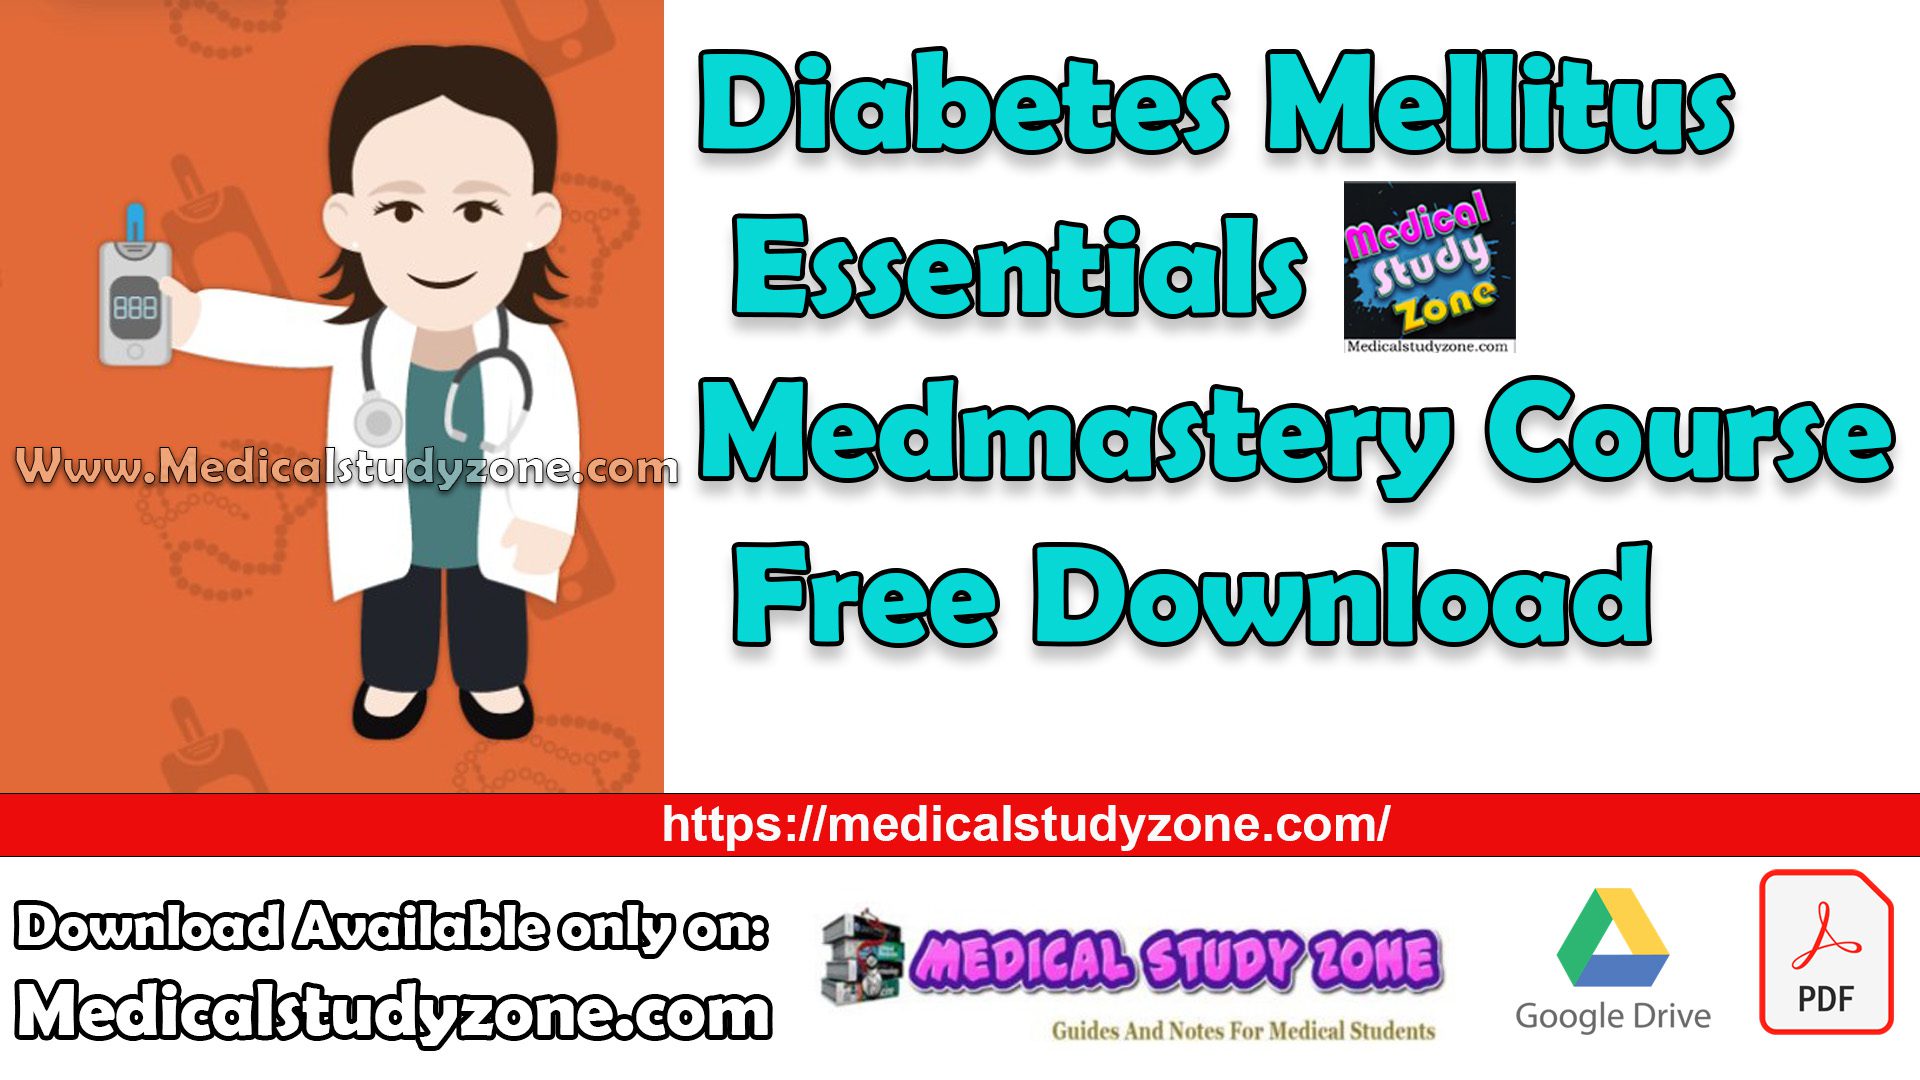 Diabetes Mellitus Essentials Medmastery Course Free Download